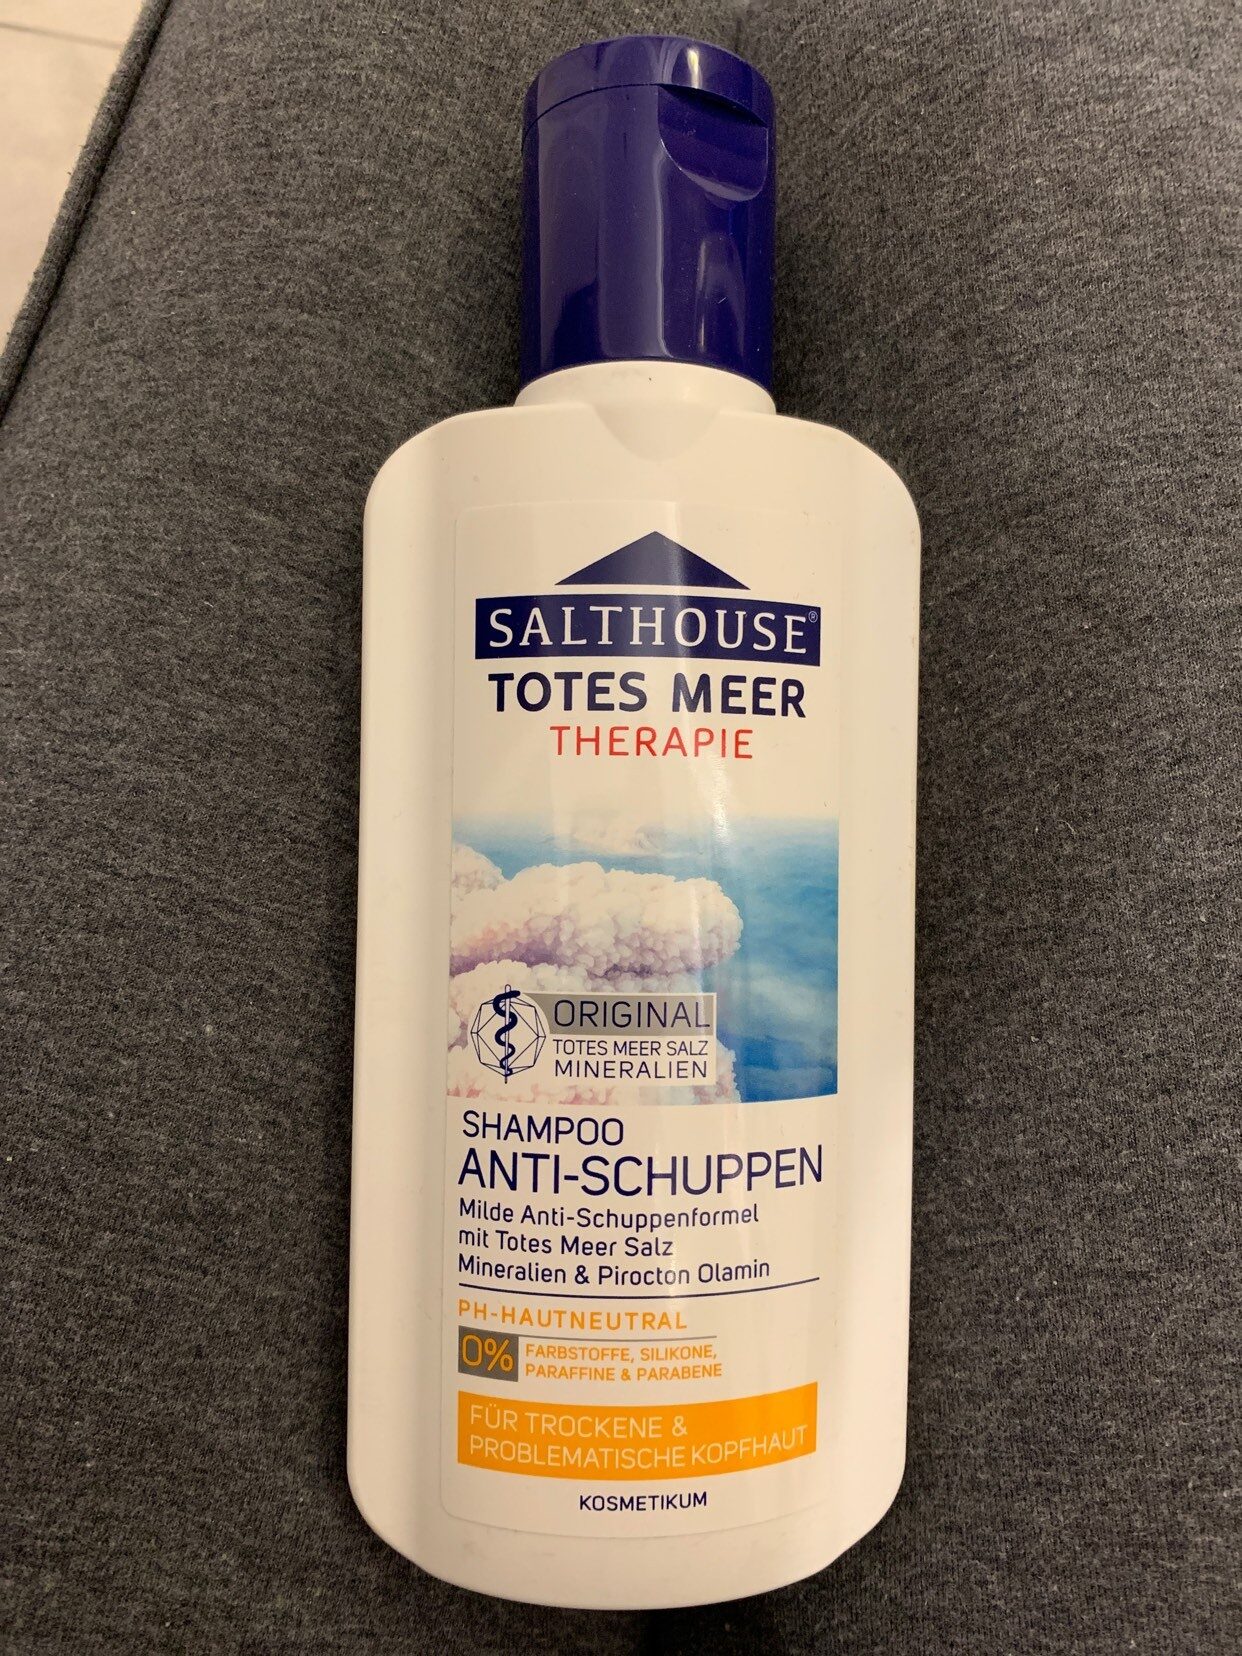 Salthouse Totes Meer Shampoo Anti-Schuppen - Produkt - de